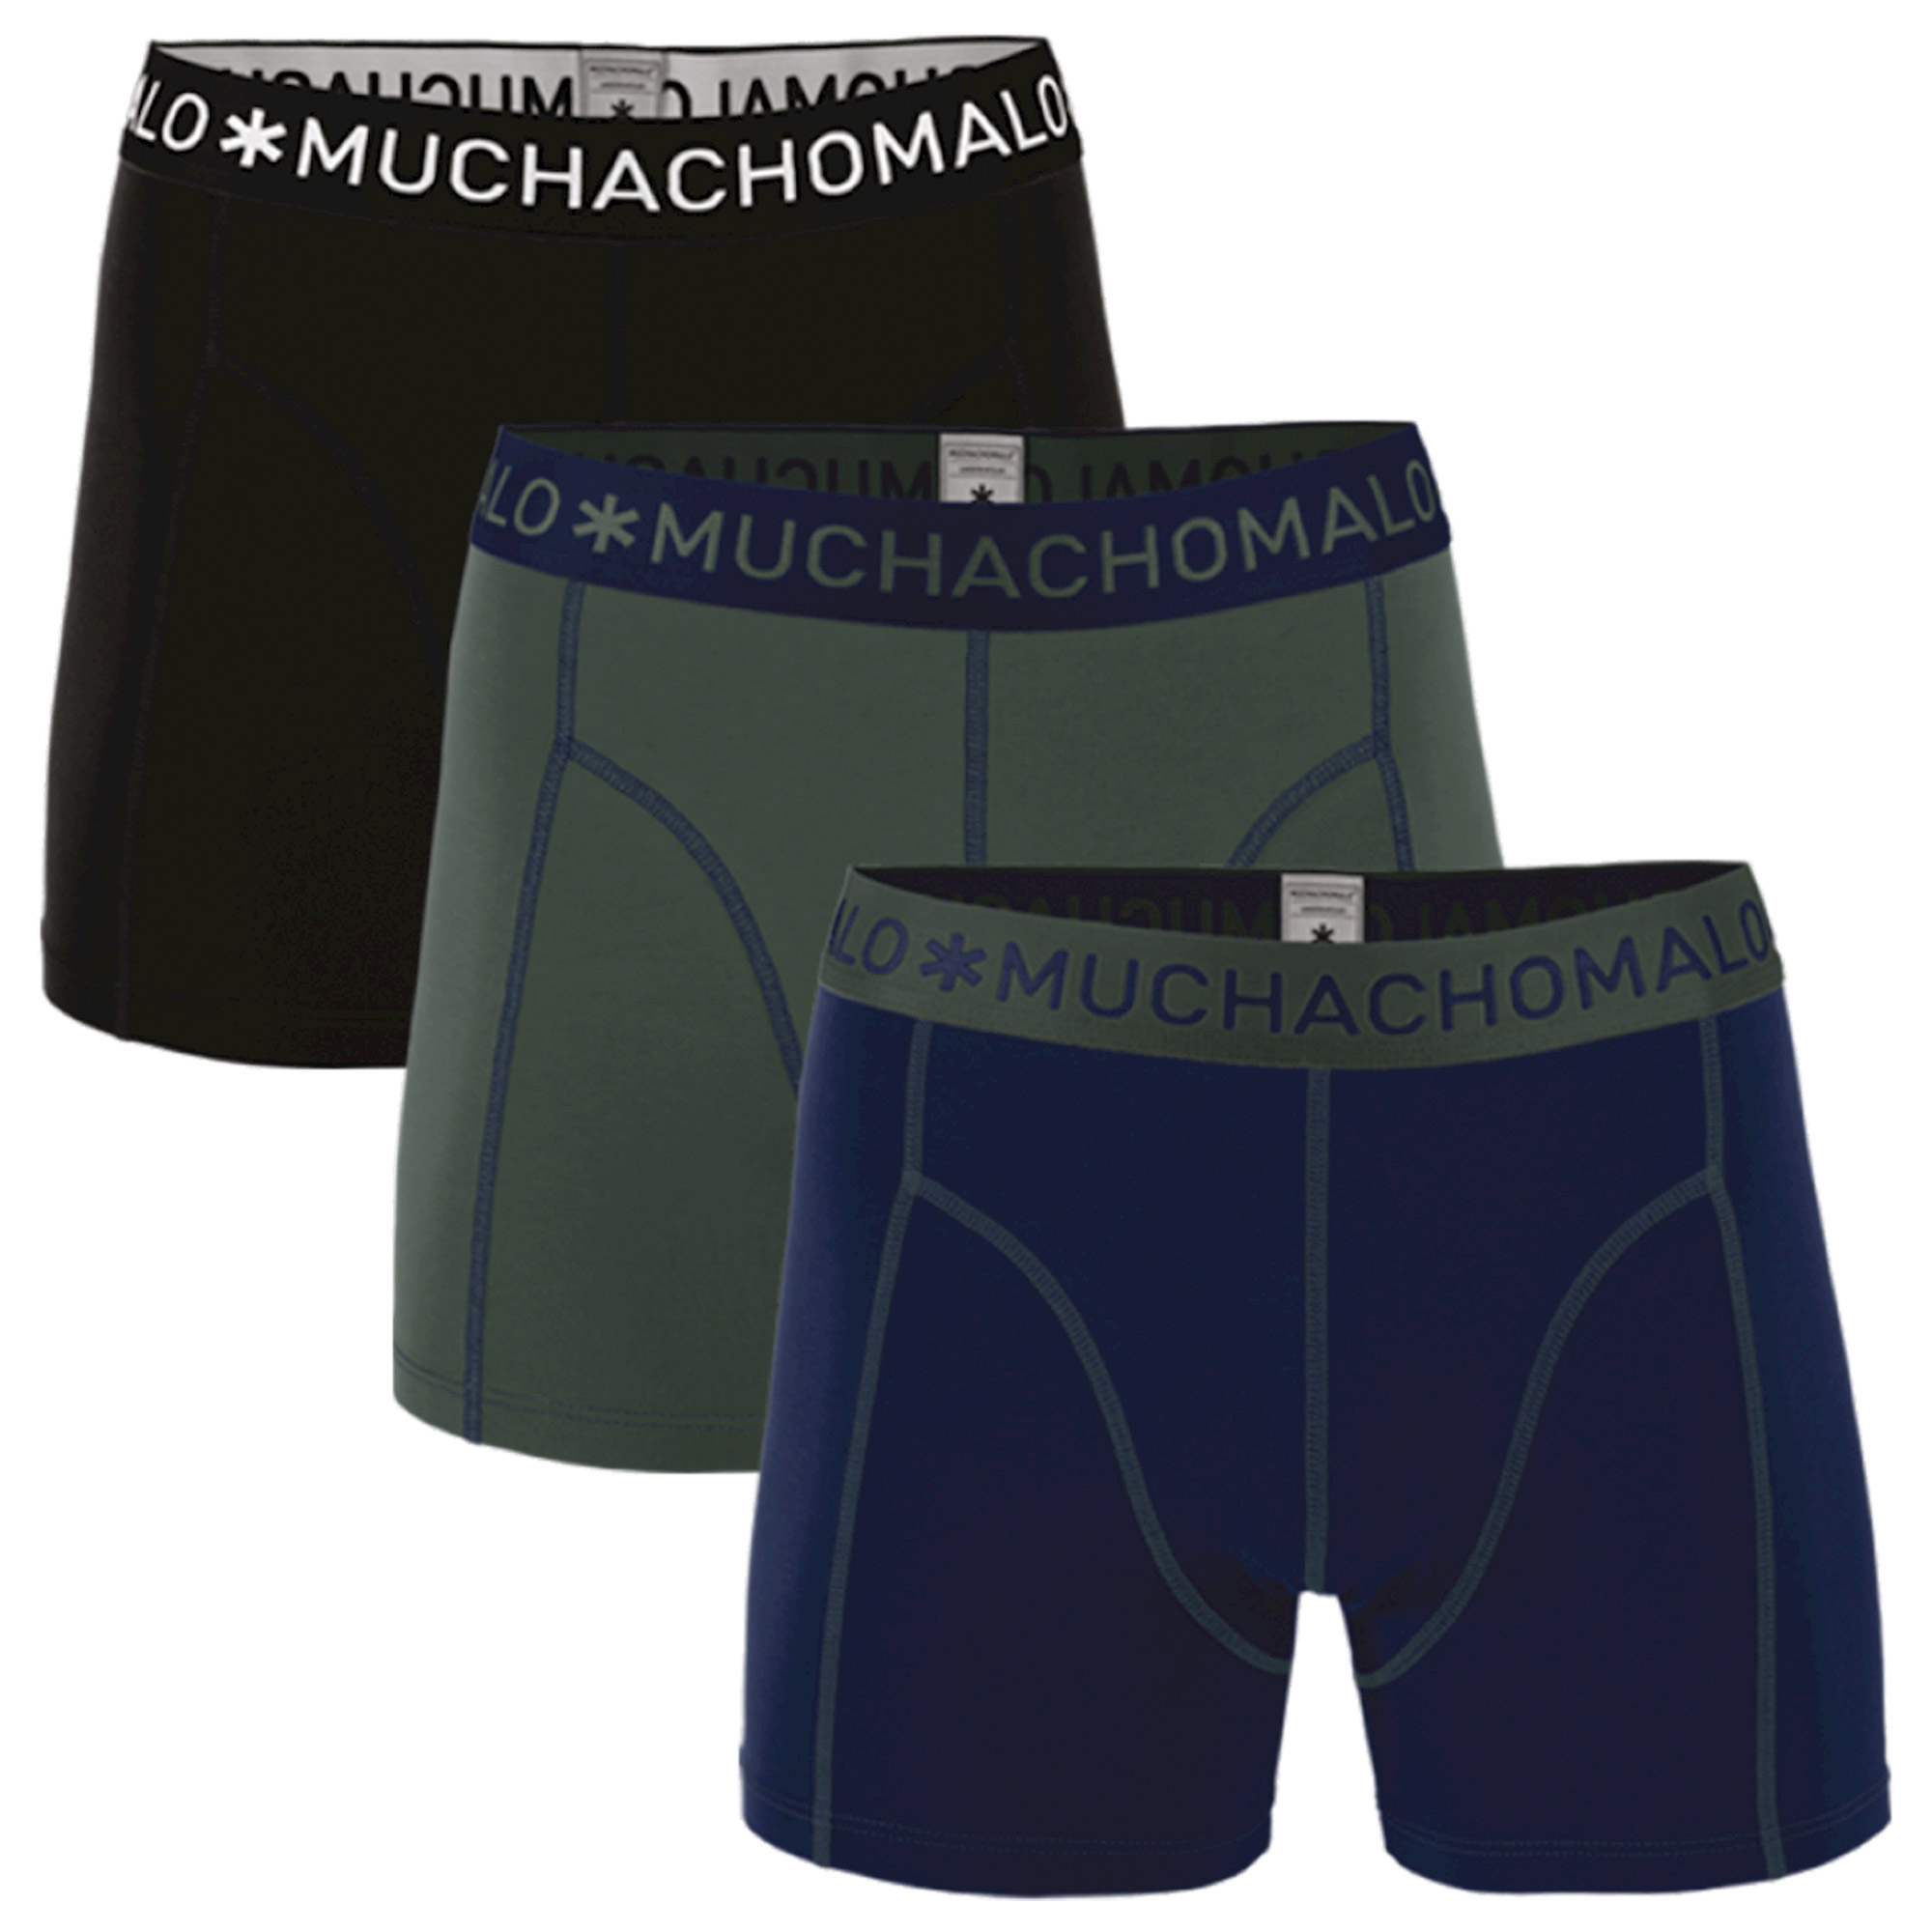 Boxers Muchachomalo Solid Homme (lot de 3)